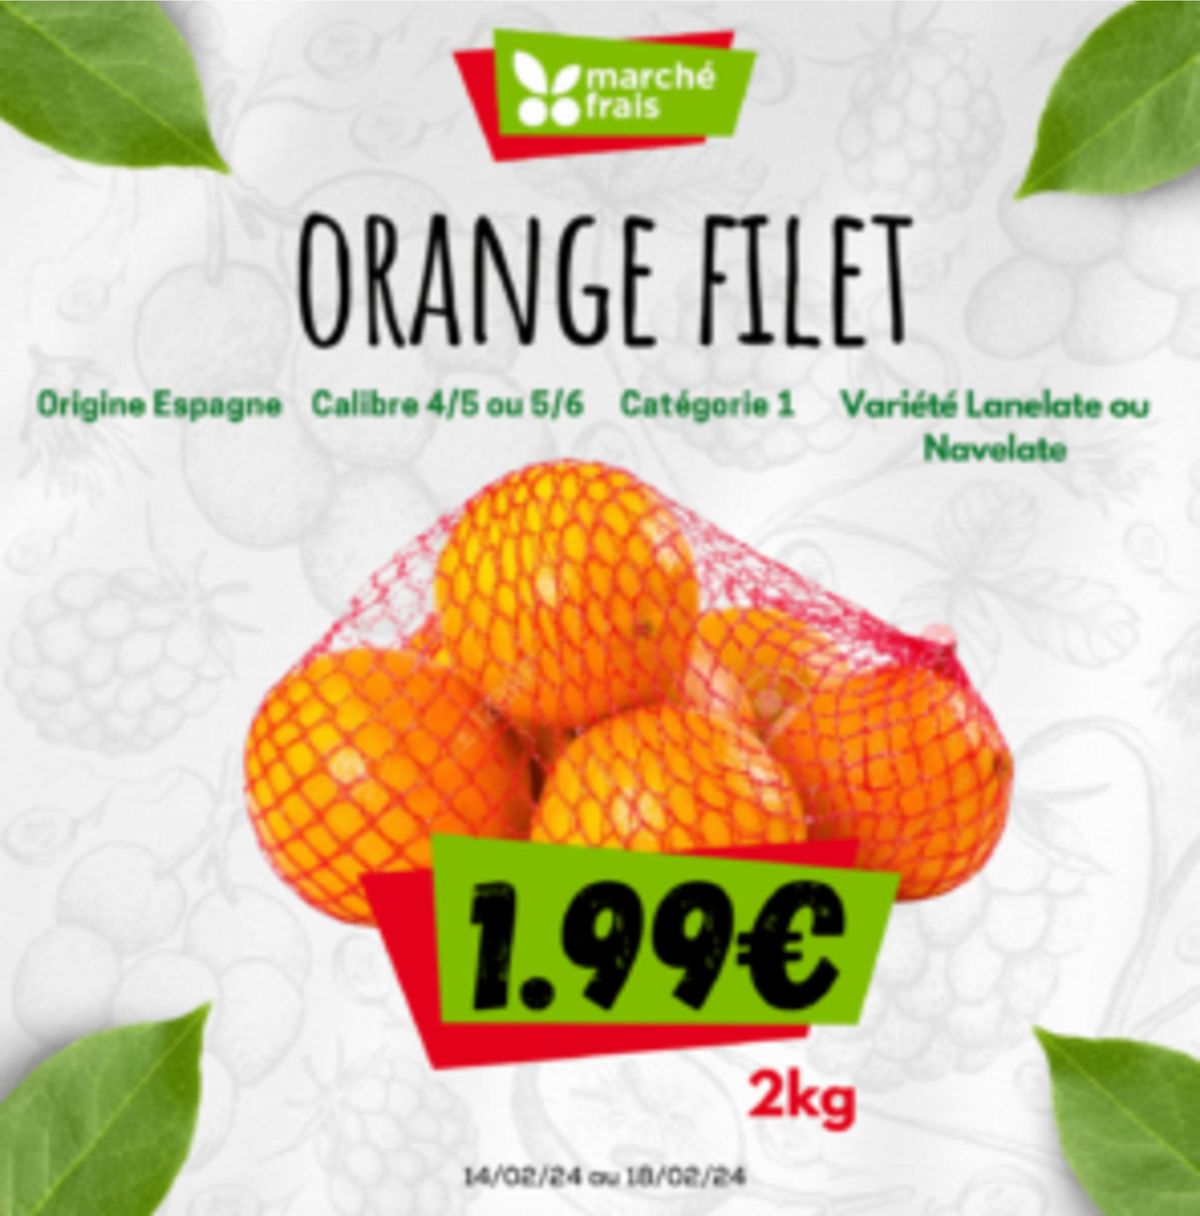 Catalogue Orange filet, page 00003